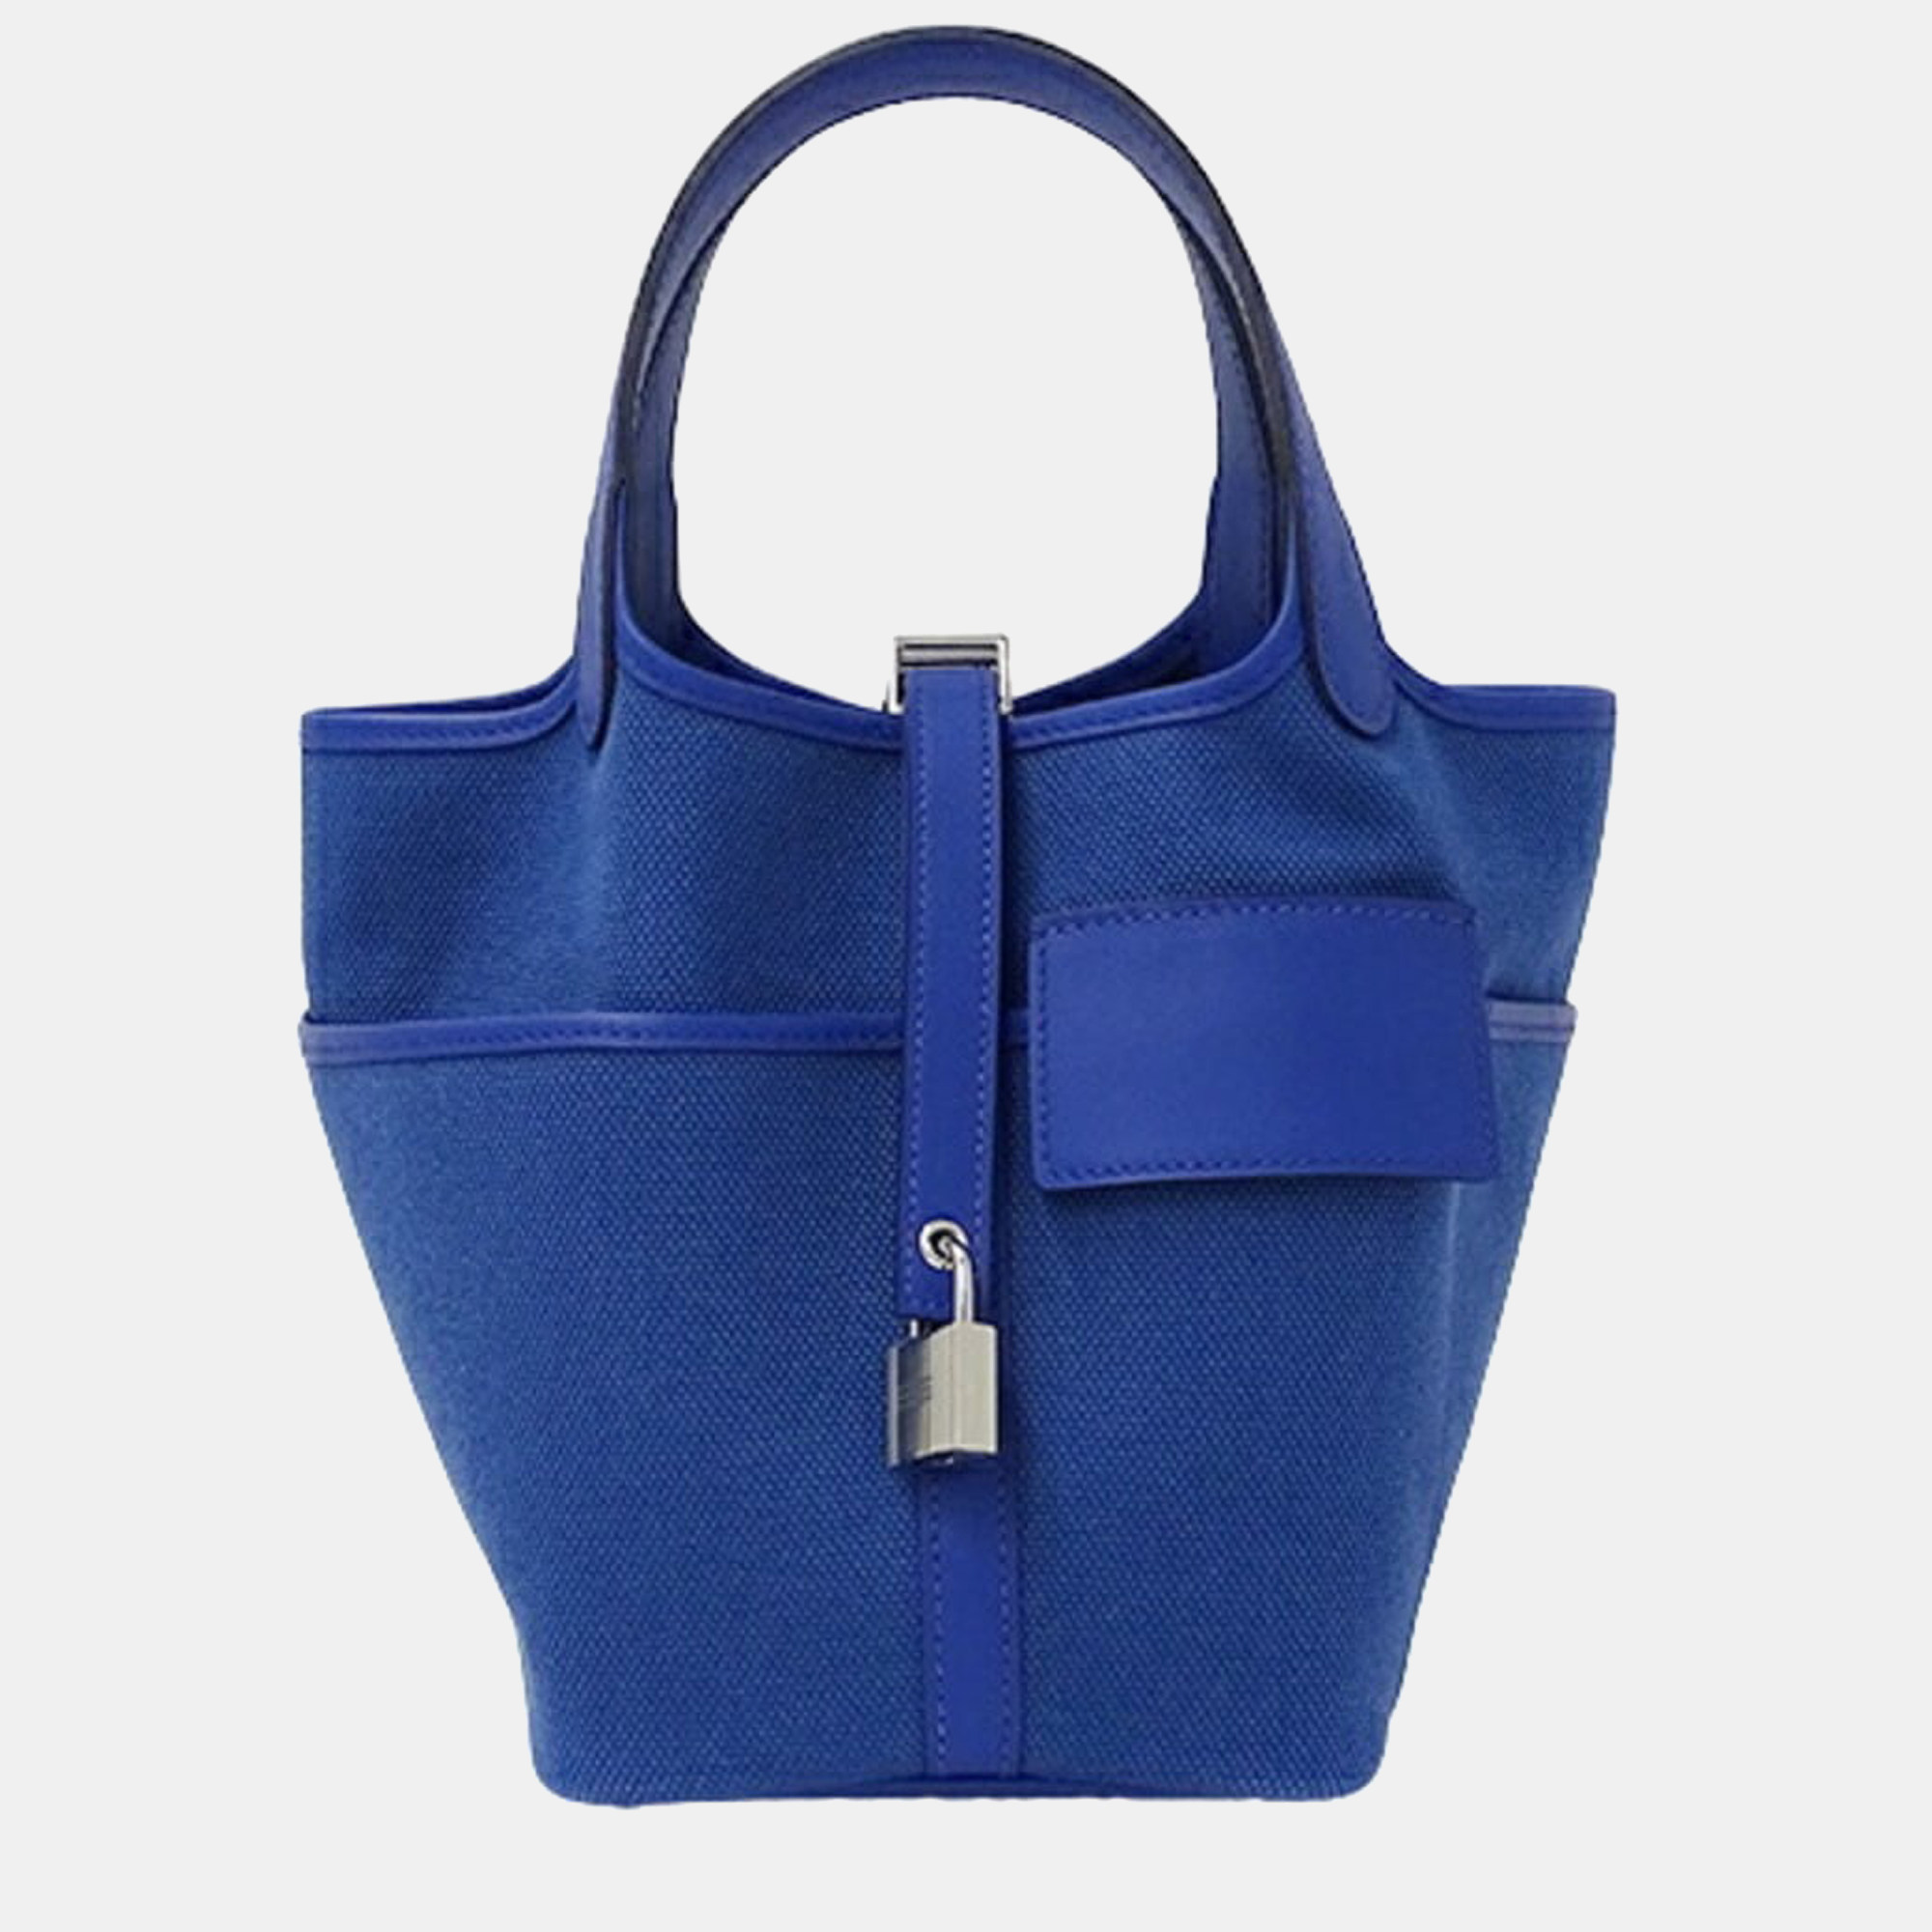 Hermes Picotin Lock Cargo PM Swift Towar Goalan Blue Royale Bag Women's Handbag Tote U Engraved